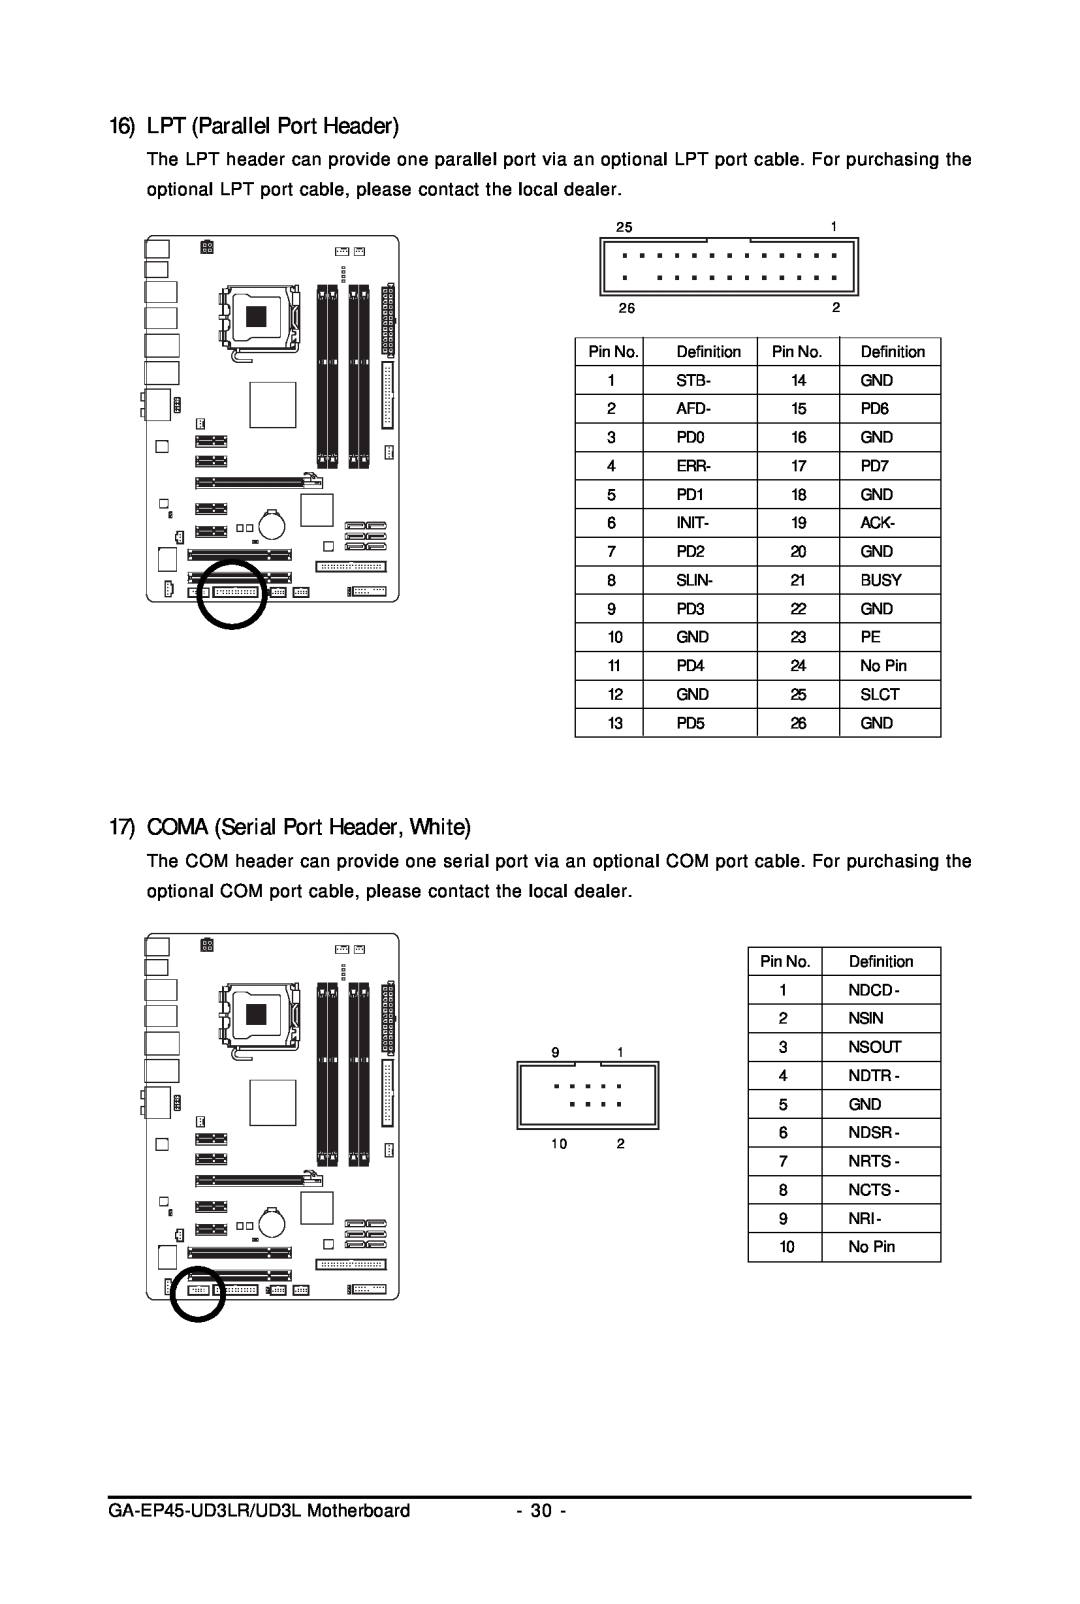 Gigabyte GA-EP45-UD3LR user manual LPT Parallel Port Header, COMA Serial Port Header, White 